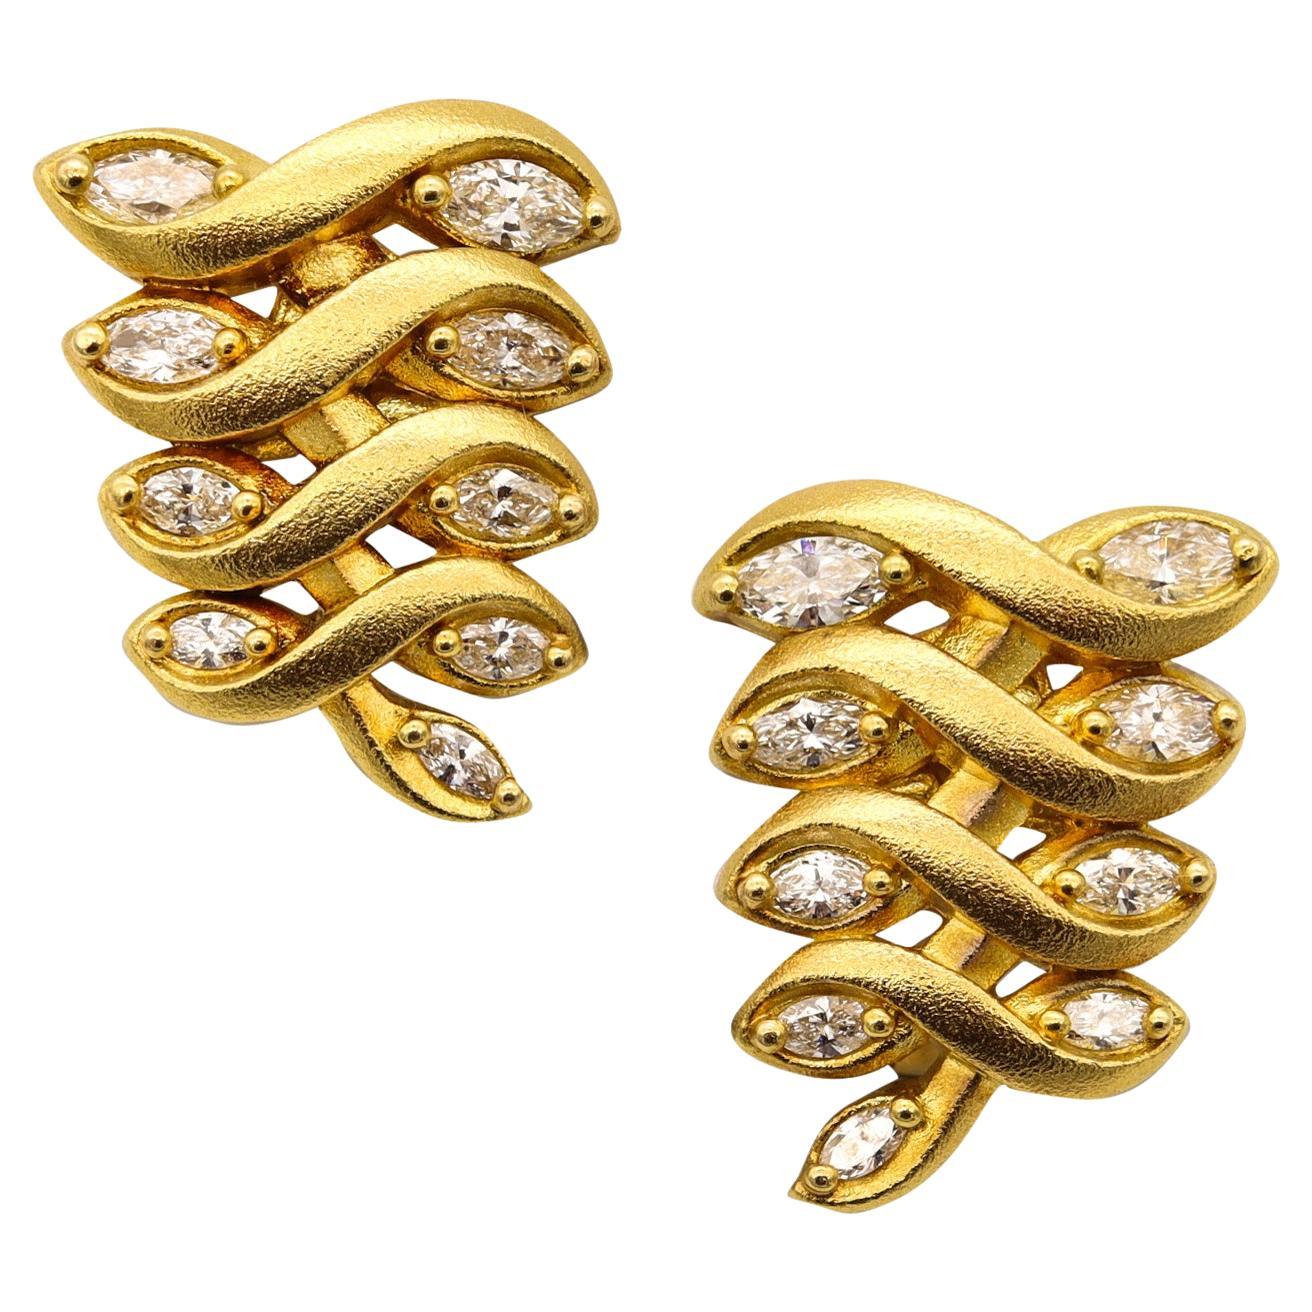 Paul Morelli, boucles d'oreilles convertibles en or jaune 18 carats et diamants VS de 3,12 carats